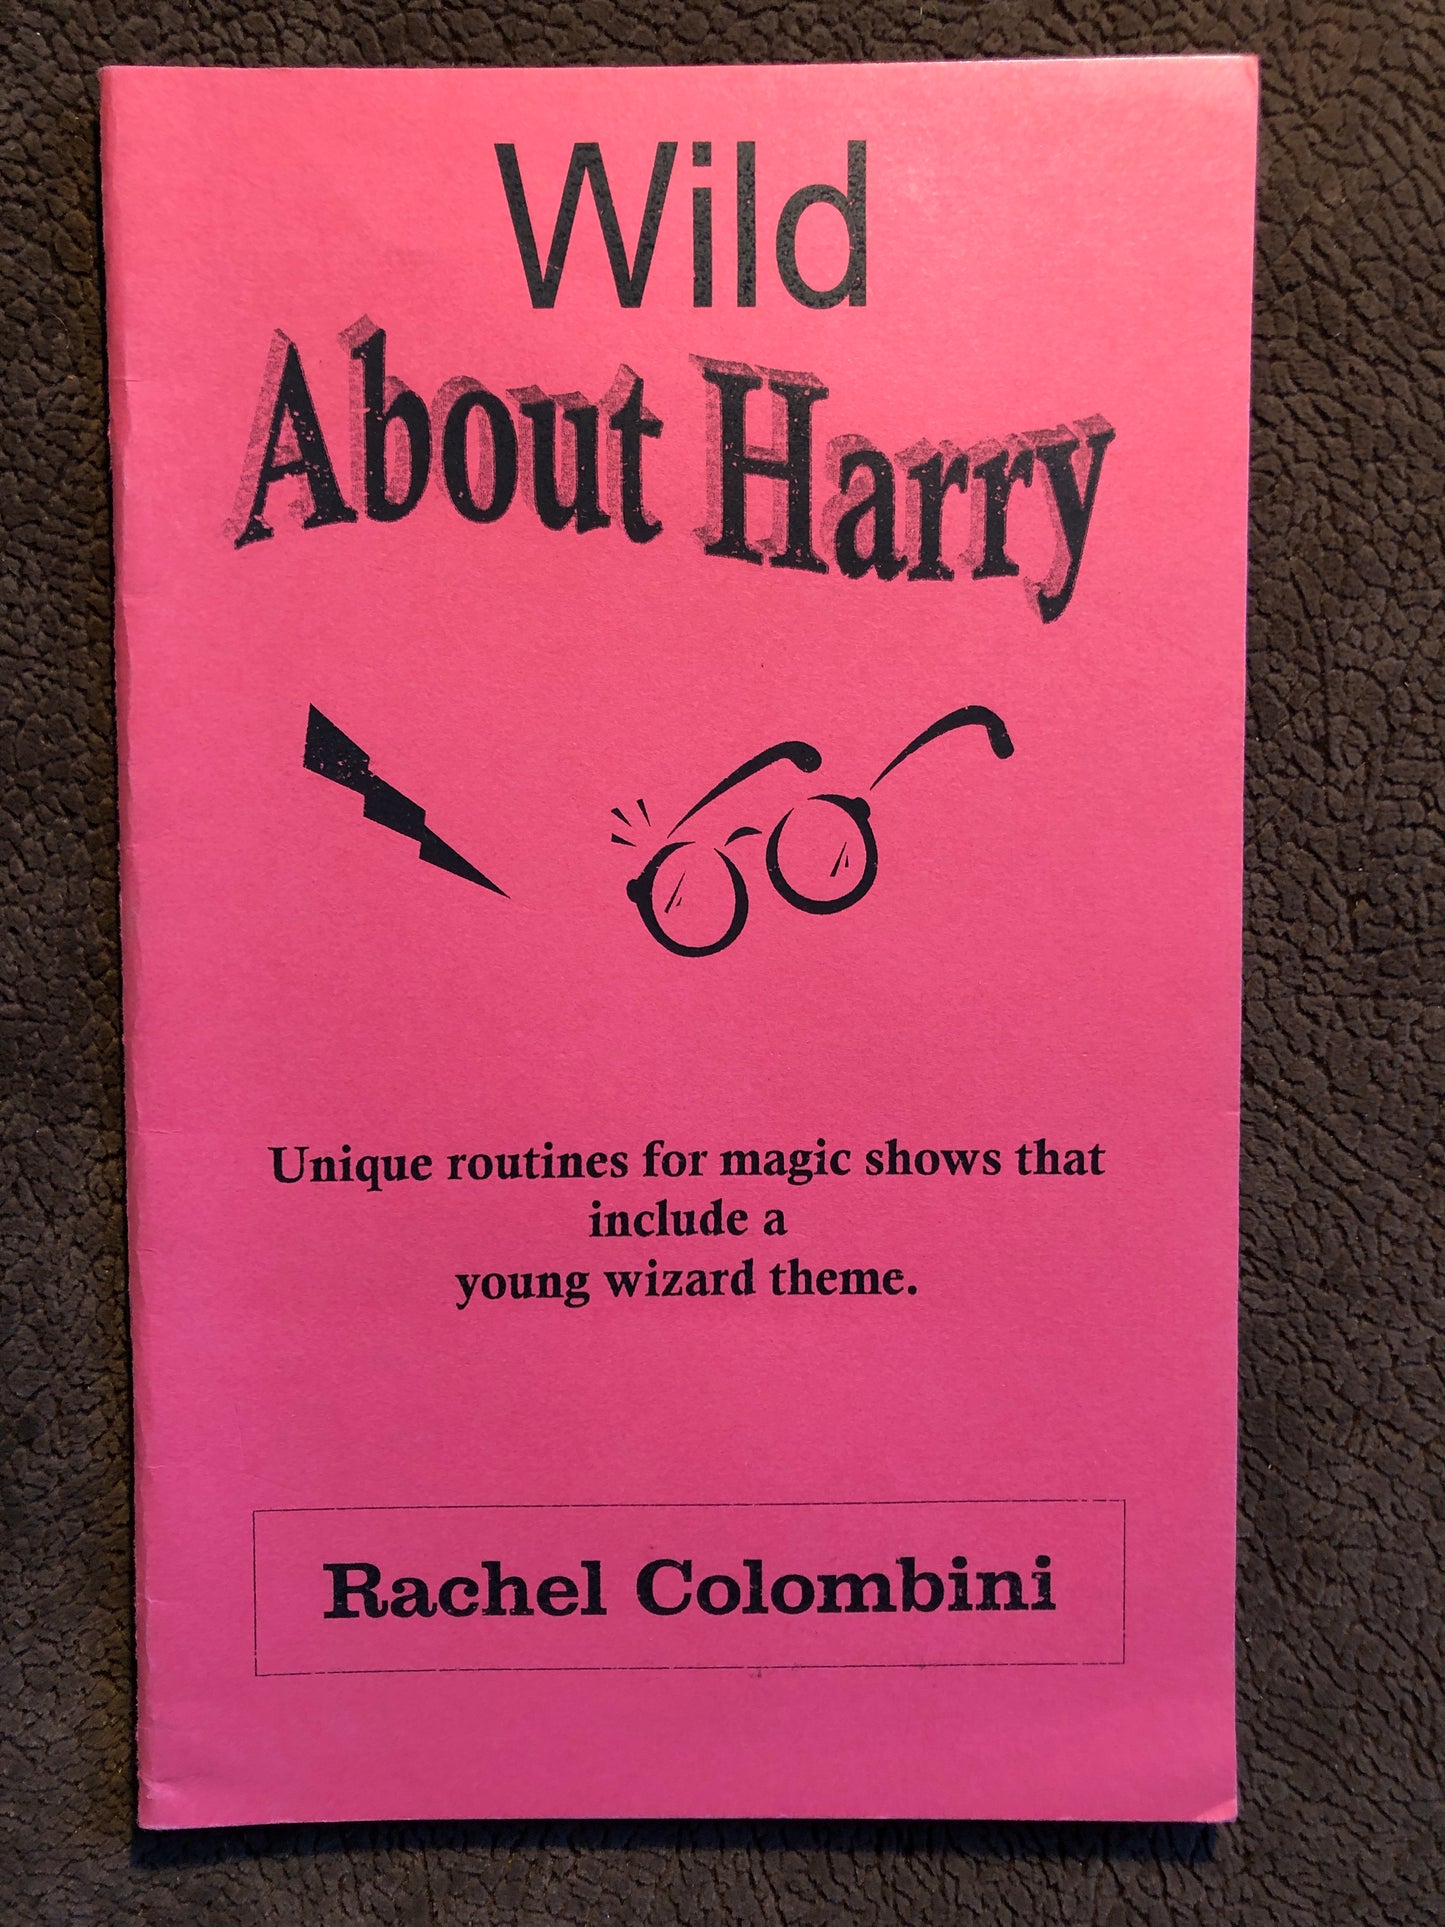 Wild About Harry - Rachel Colombini